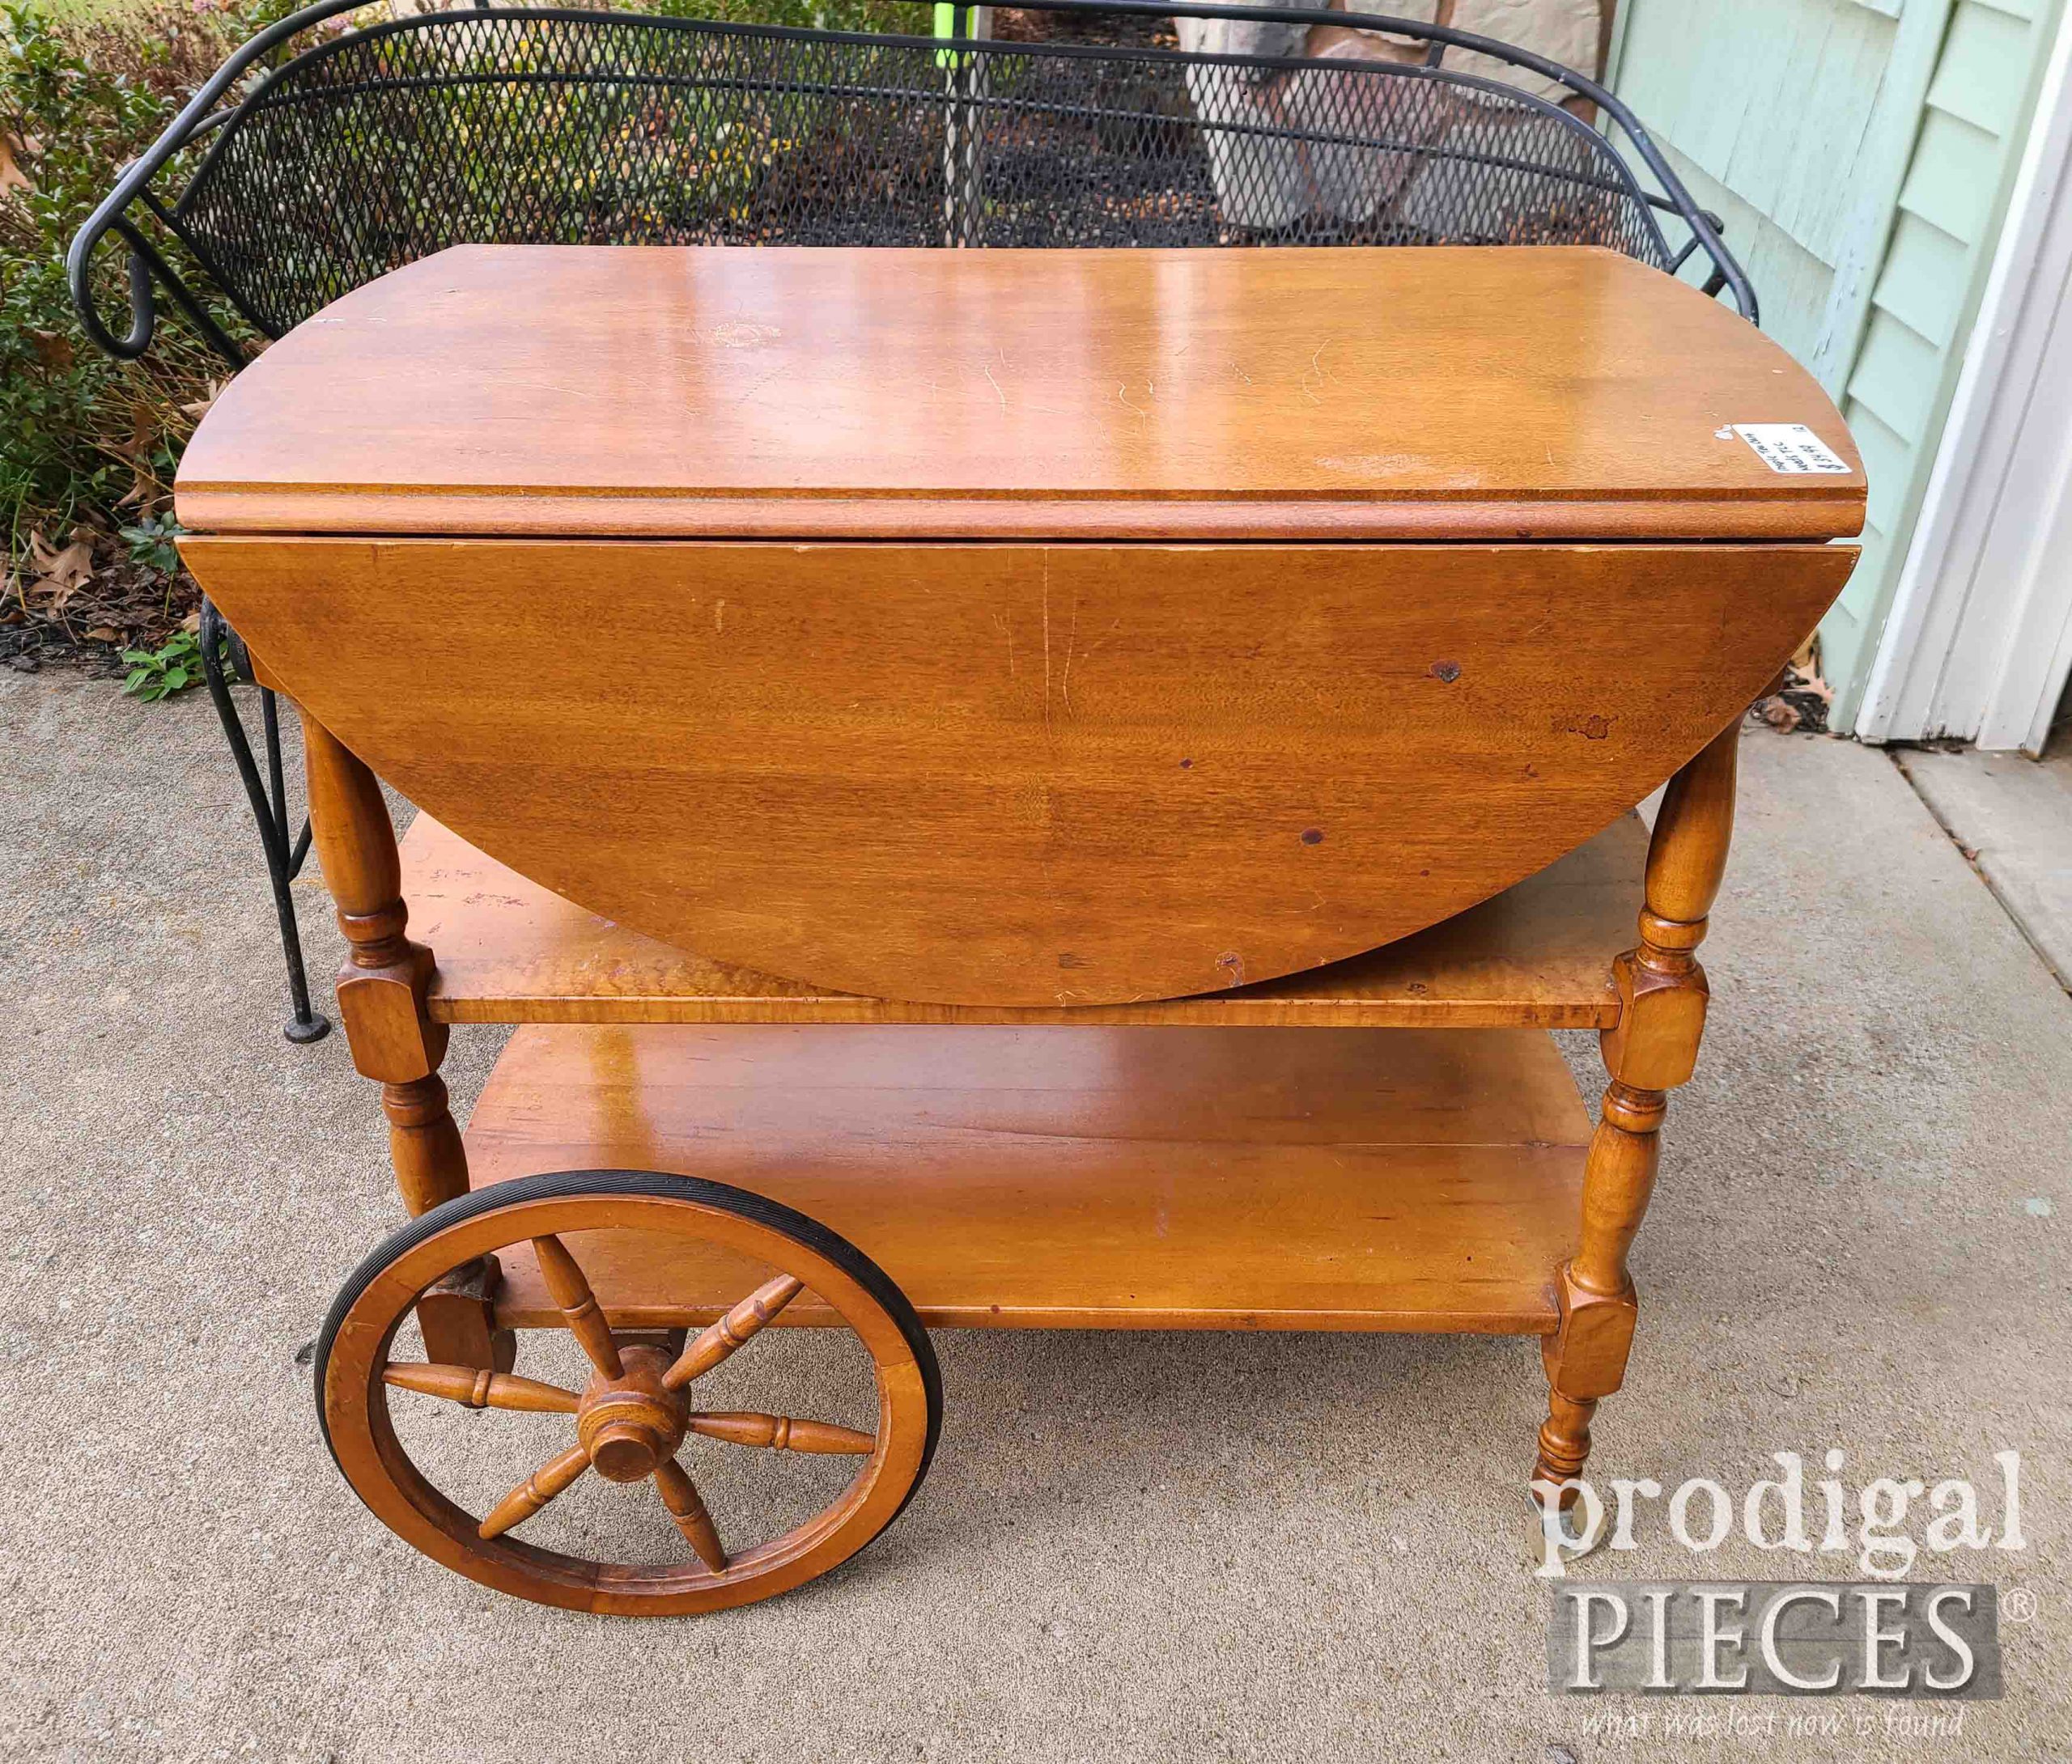 Vintage Broken Tea Cart Before | prodigalpieces.com #prodigalpieces